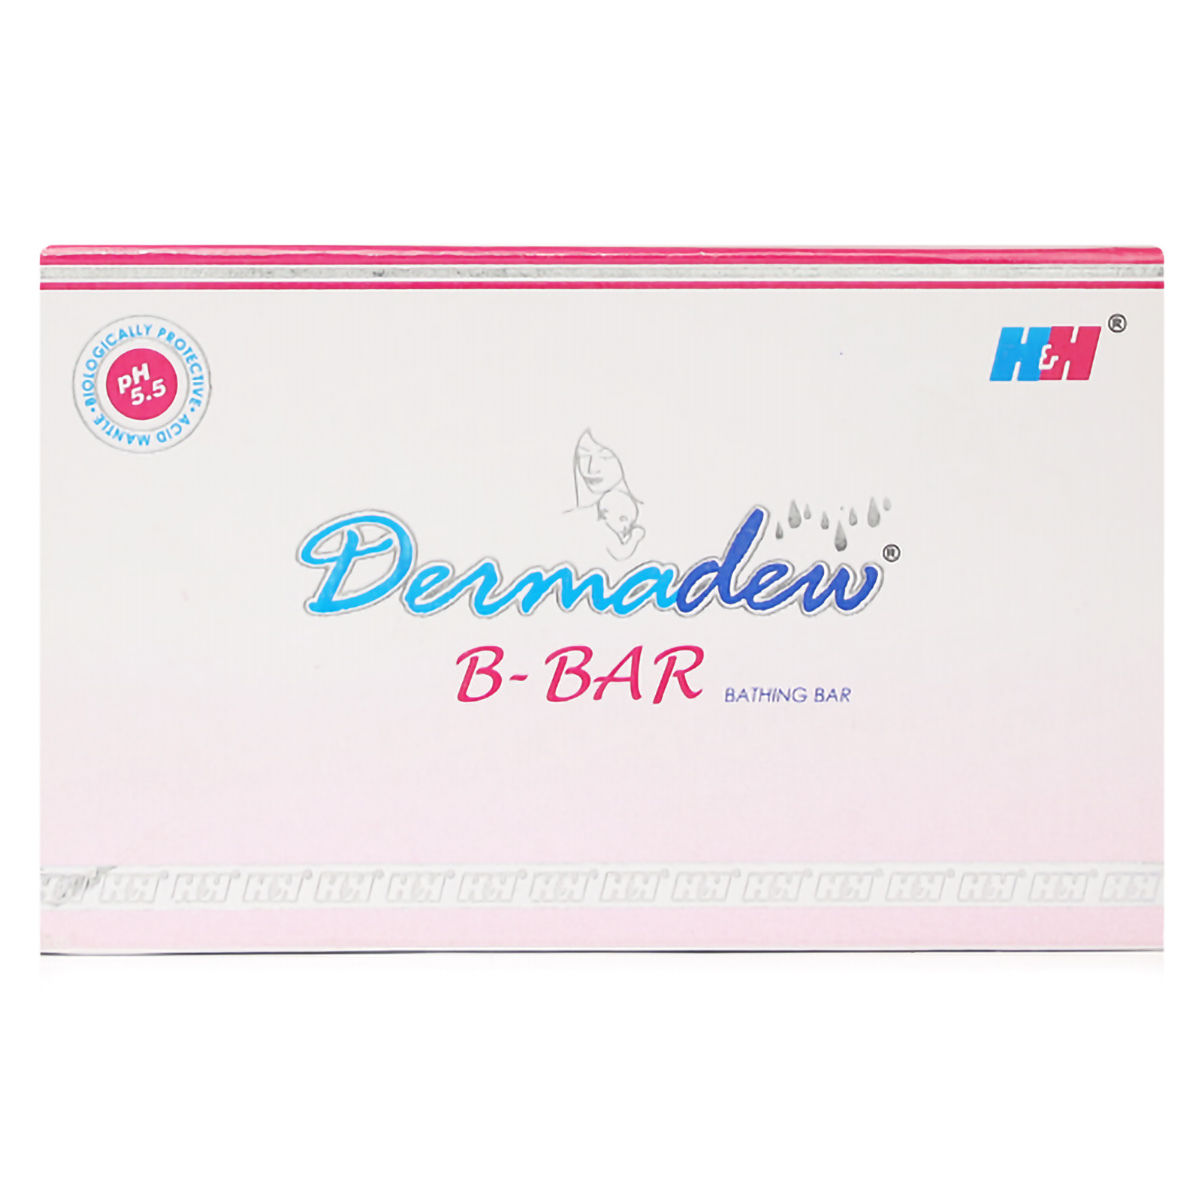 Dermadew B-Bar, 75 gm, Pack of 1 